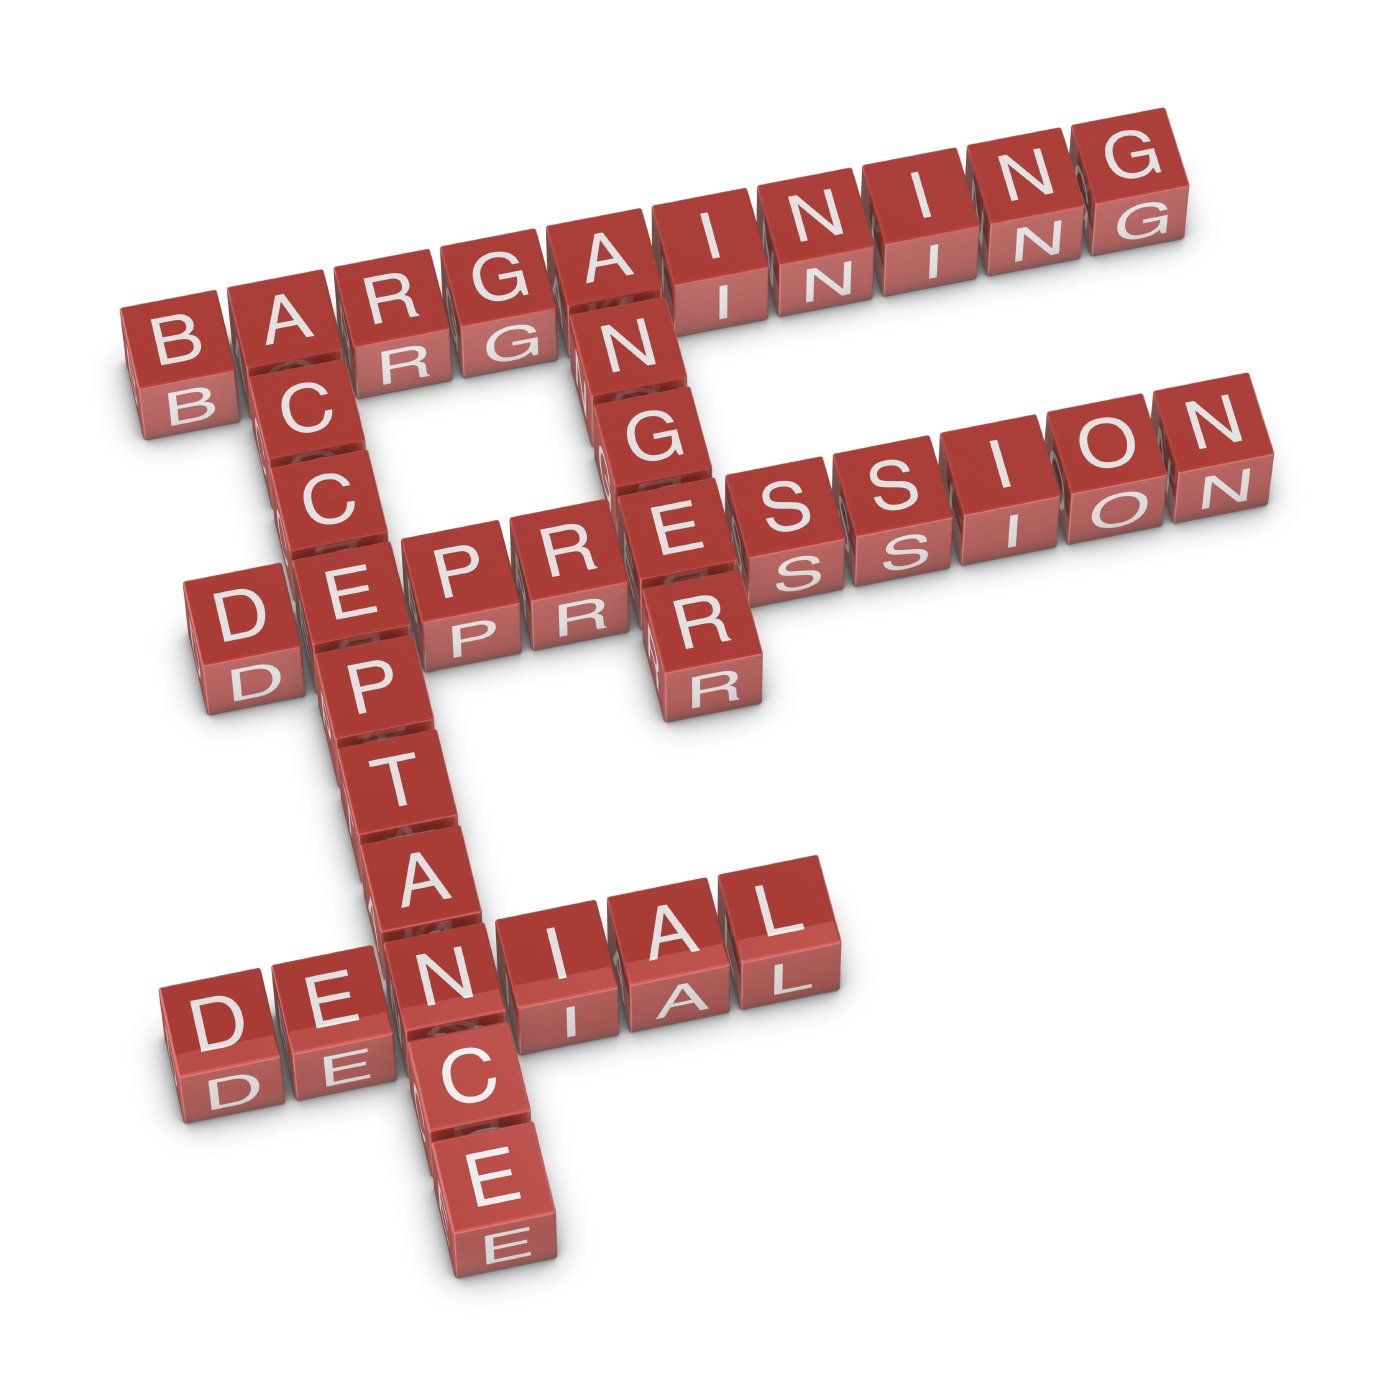 Letter cubes spelling: depression, denial, anger, bargaining, acceptance